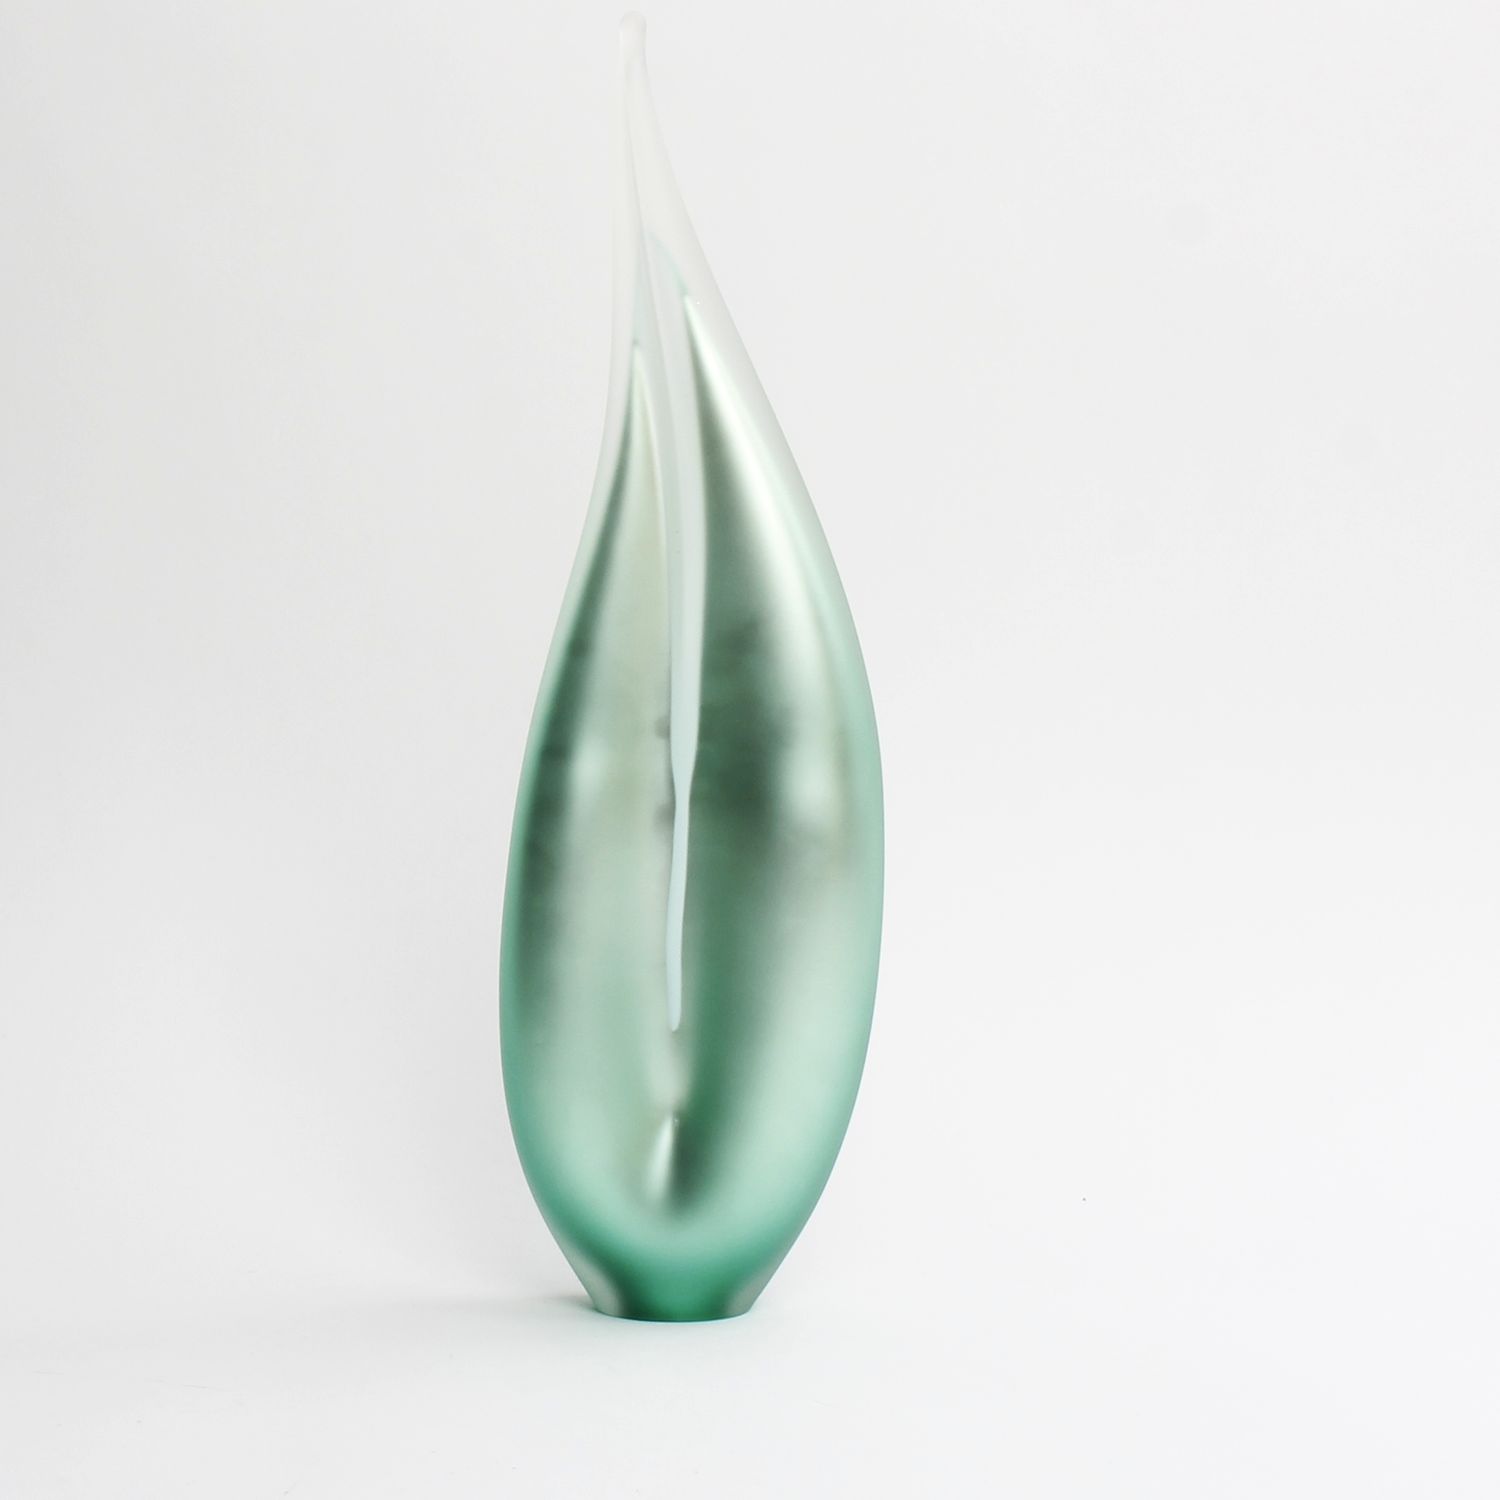 Soffi Studio: Medium Green Flame Product Image 1 of 2